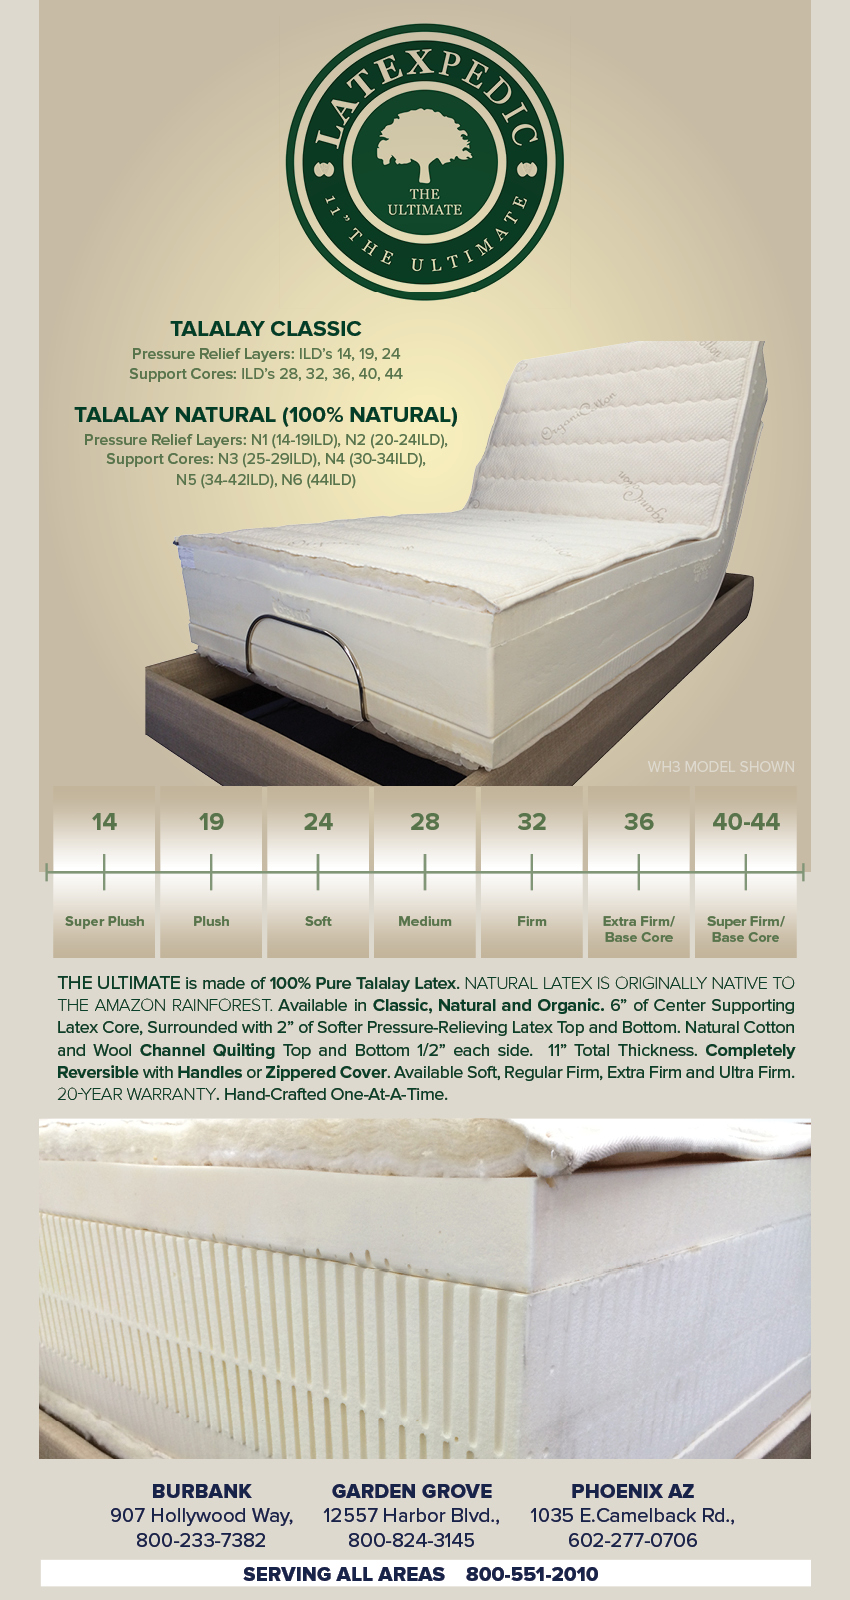 THE ULTIMATE phoenix beds latex natural organic mattress phoenix az 100% pure Talalay latex